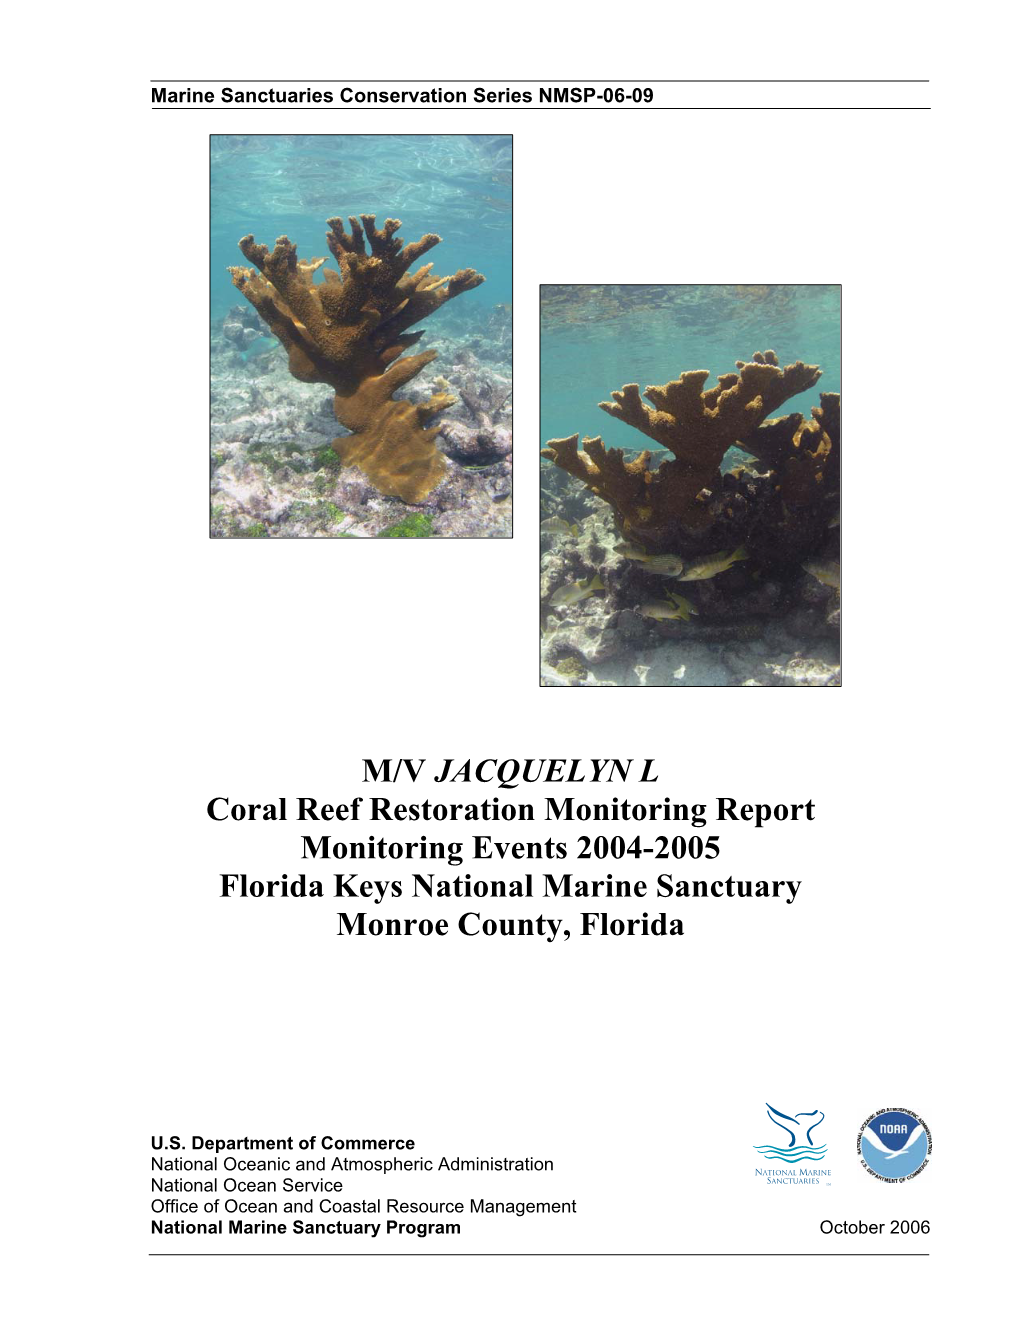 M/V JACQUELYN L Coral Reef Restoration Monitoring Report Monitoring Events 2004-2005 Florida Keys National Marine Sanctuary Monroe County, Florida